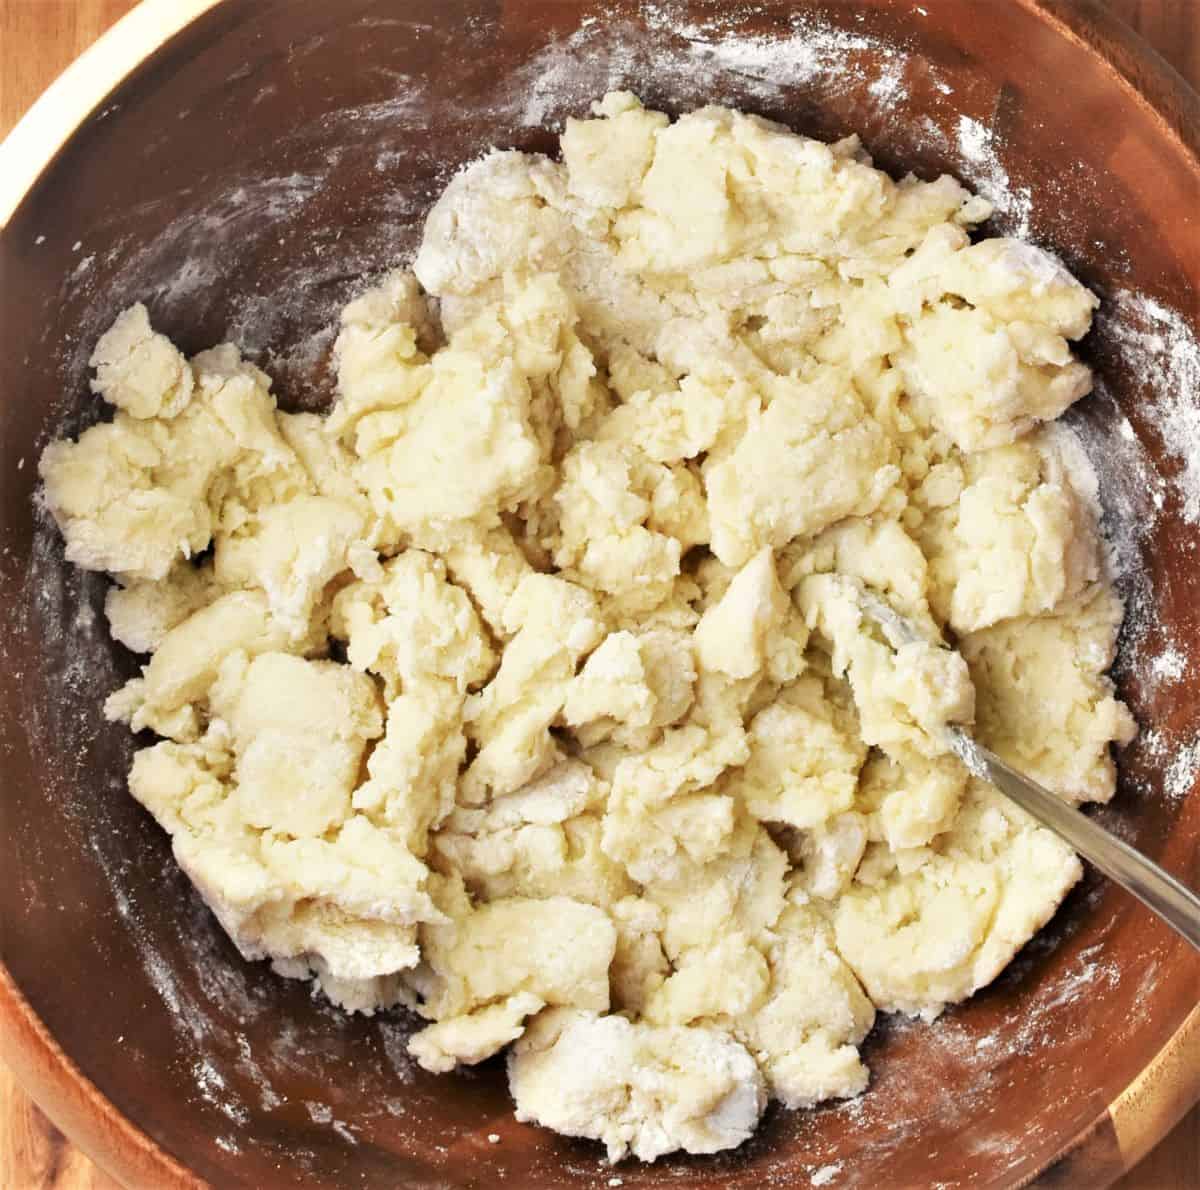 Making dough for potato dumplings in large wooden bowl.